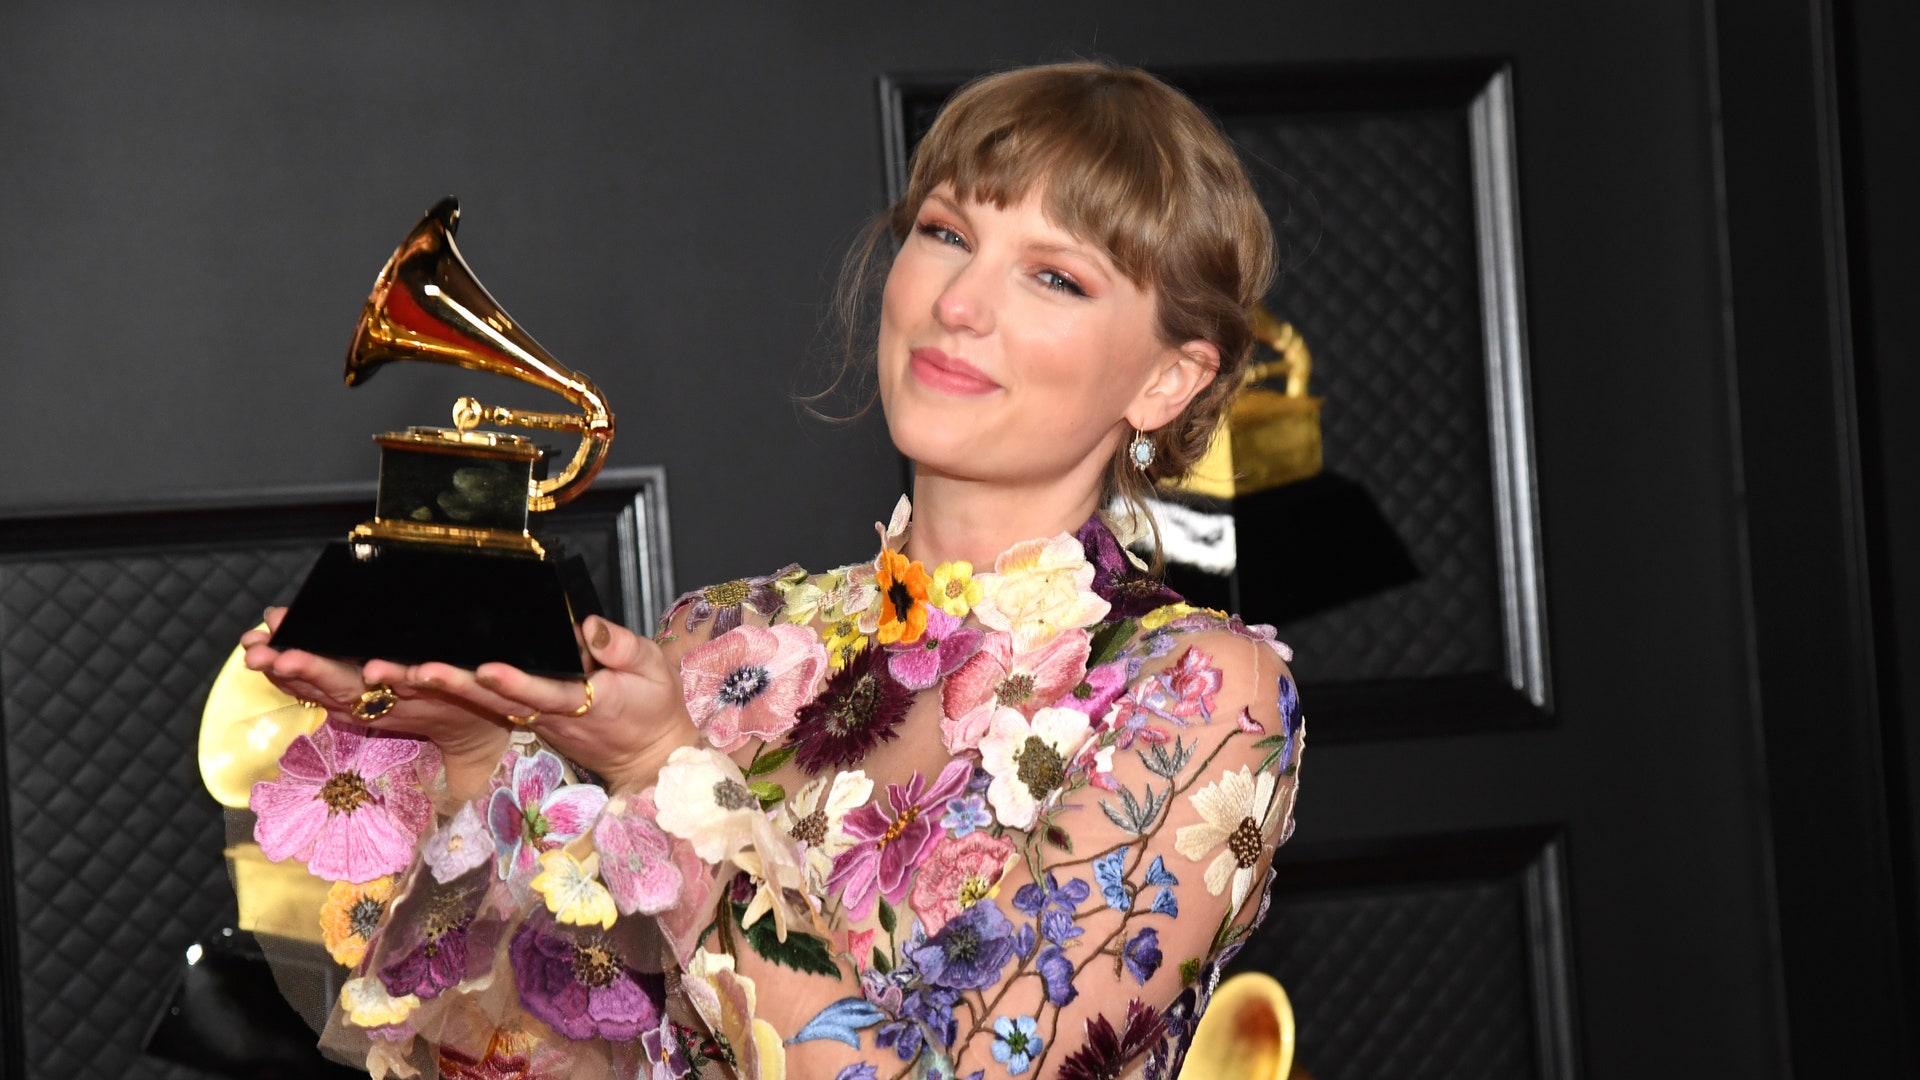 Taylor Swift vince il Grammy Award 2021 con "Folkore"